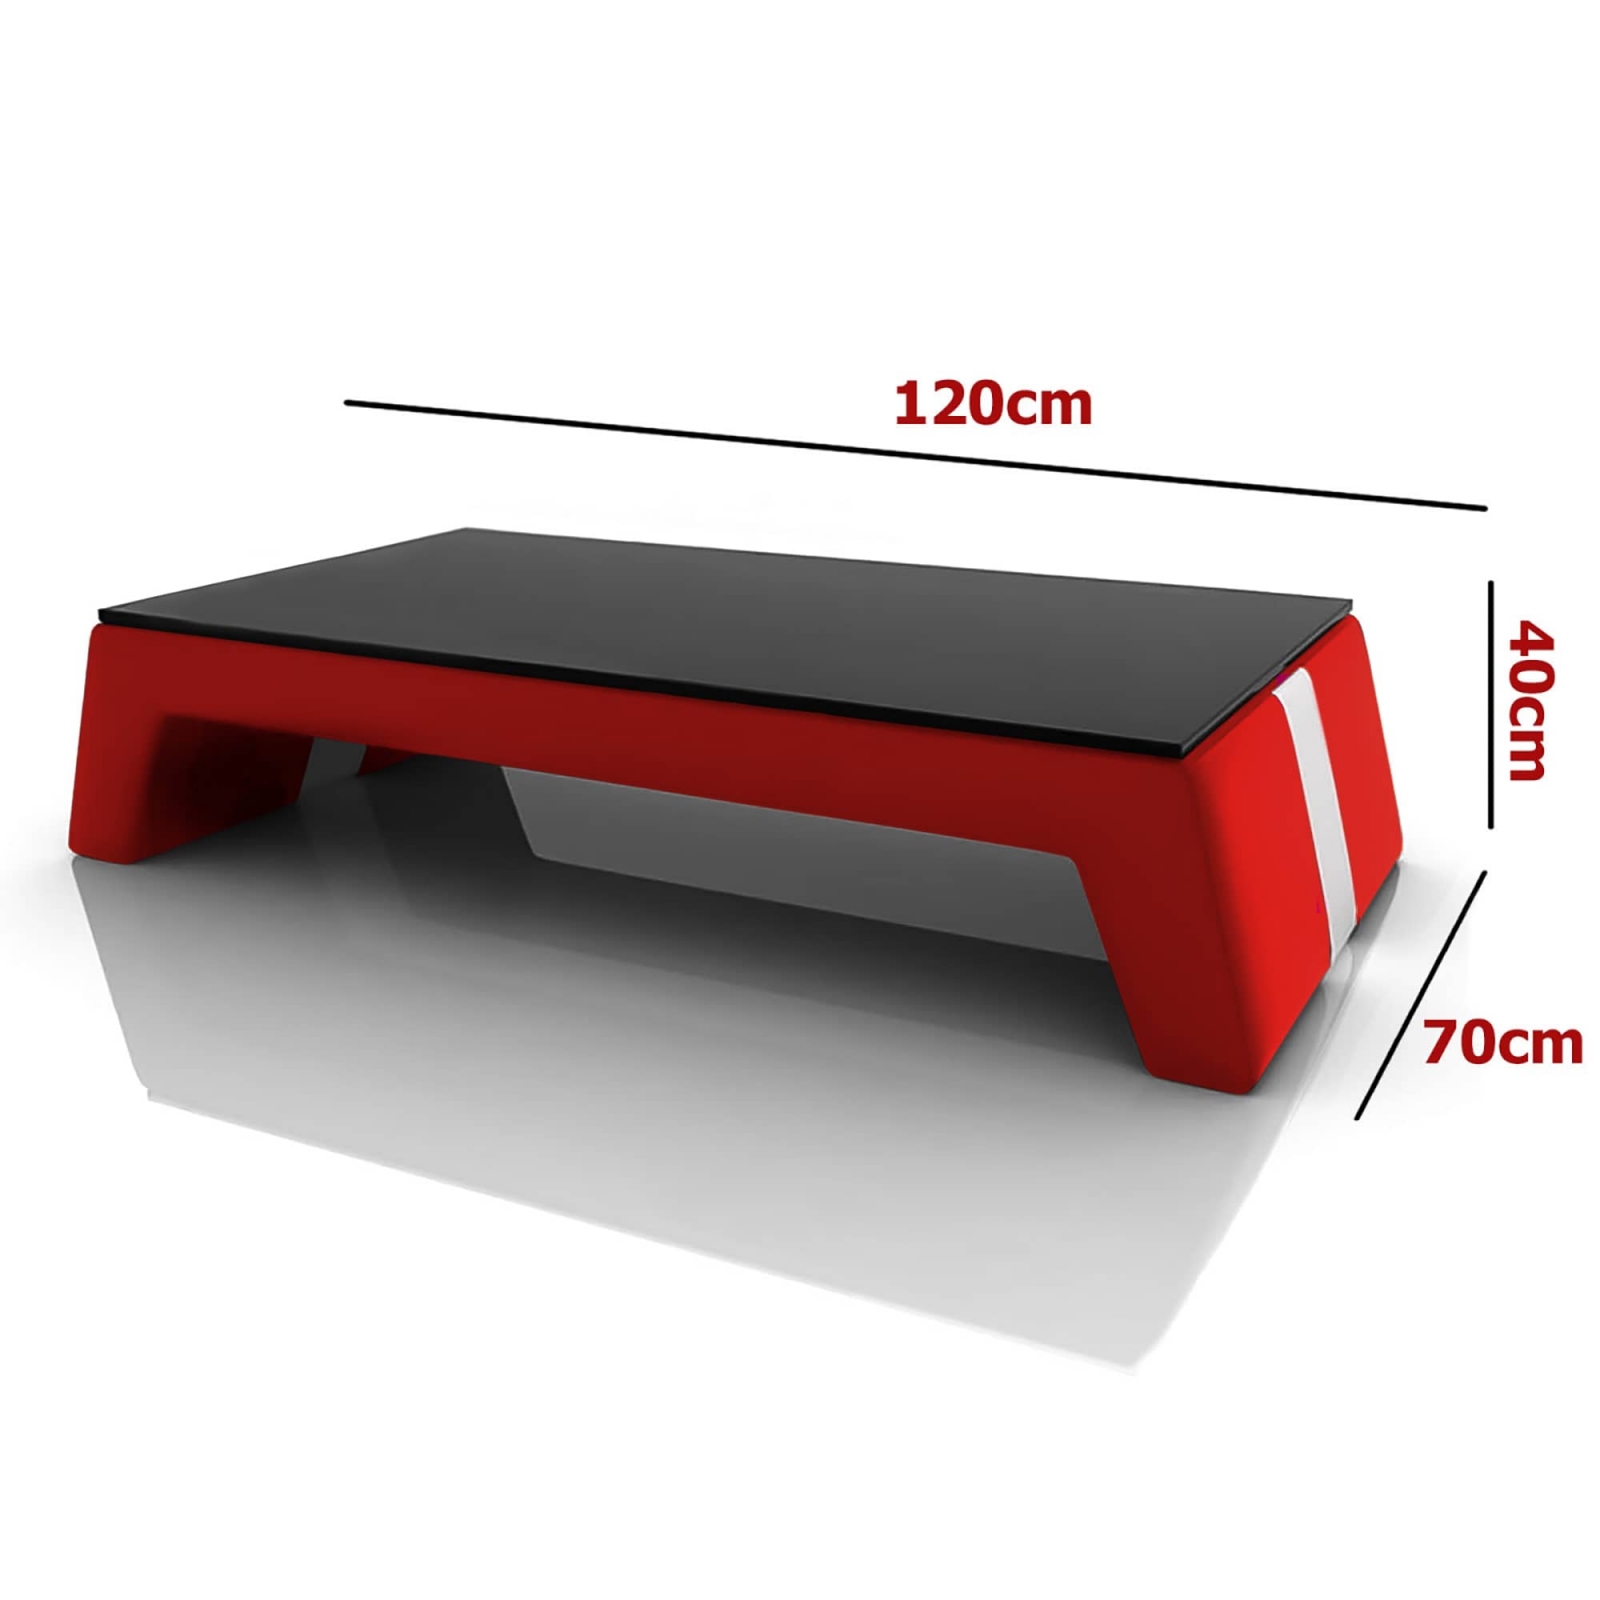 Table basse design rouge et blanc